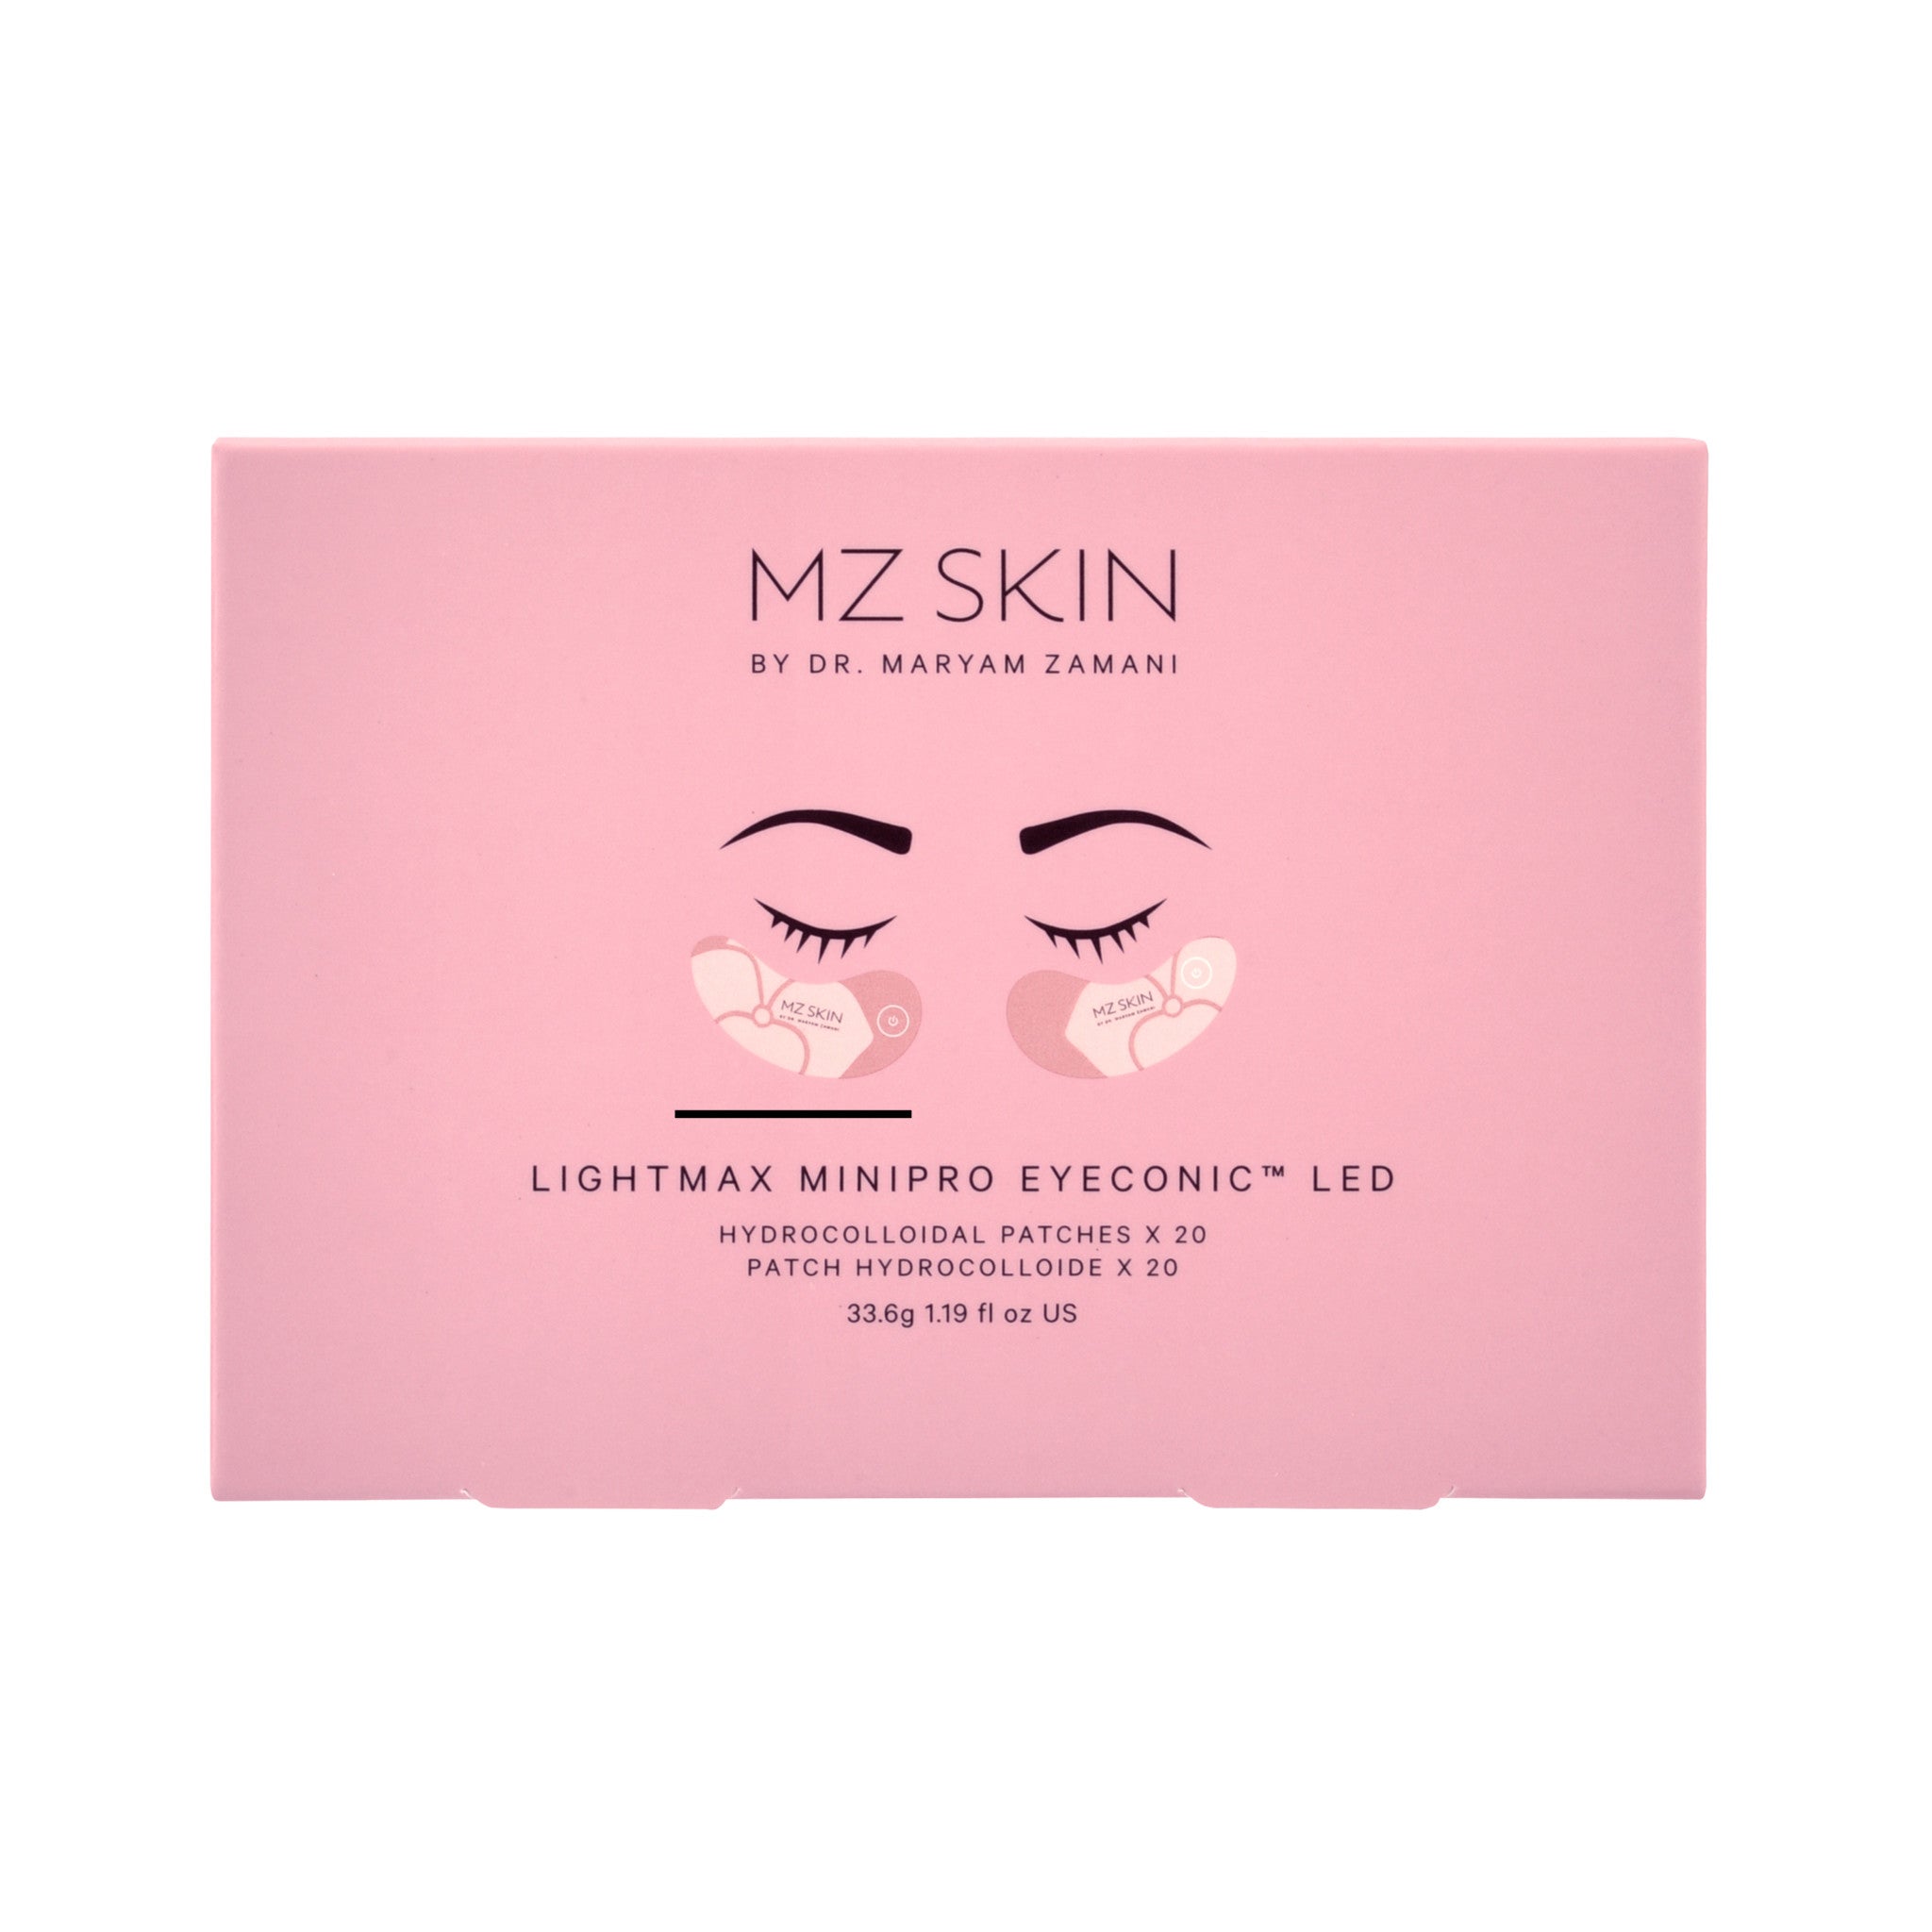 MZ Skin Lightmax Minipro Hydrocolloid Patches main image.